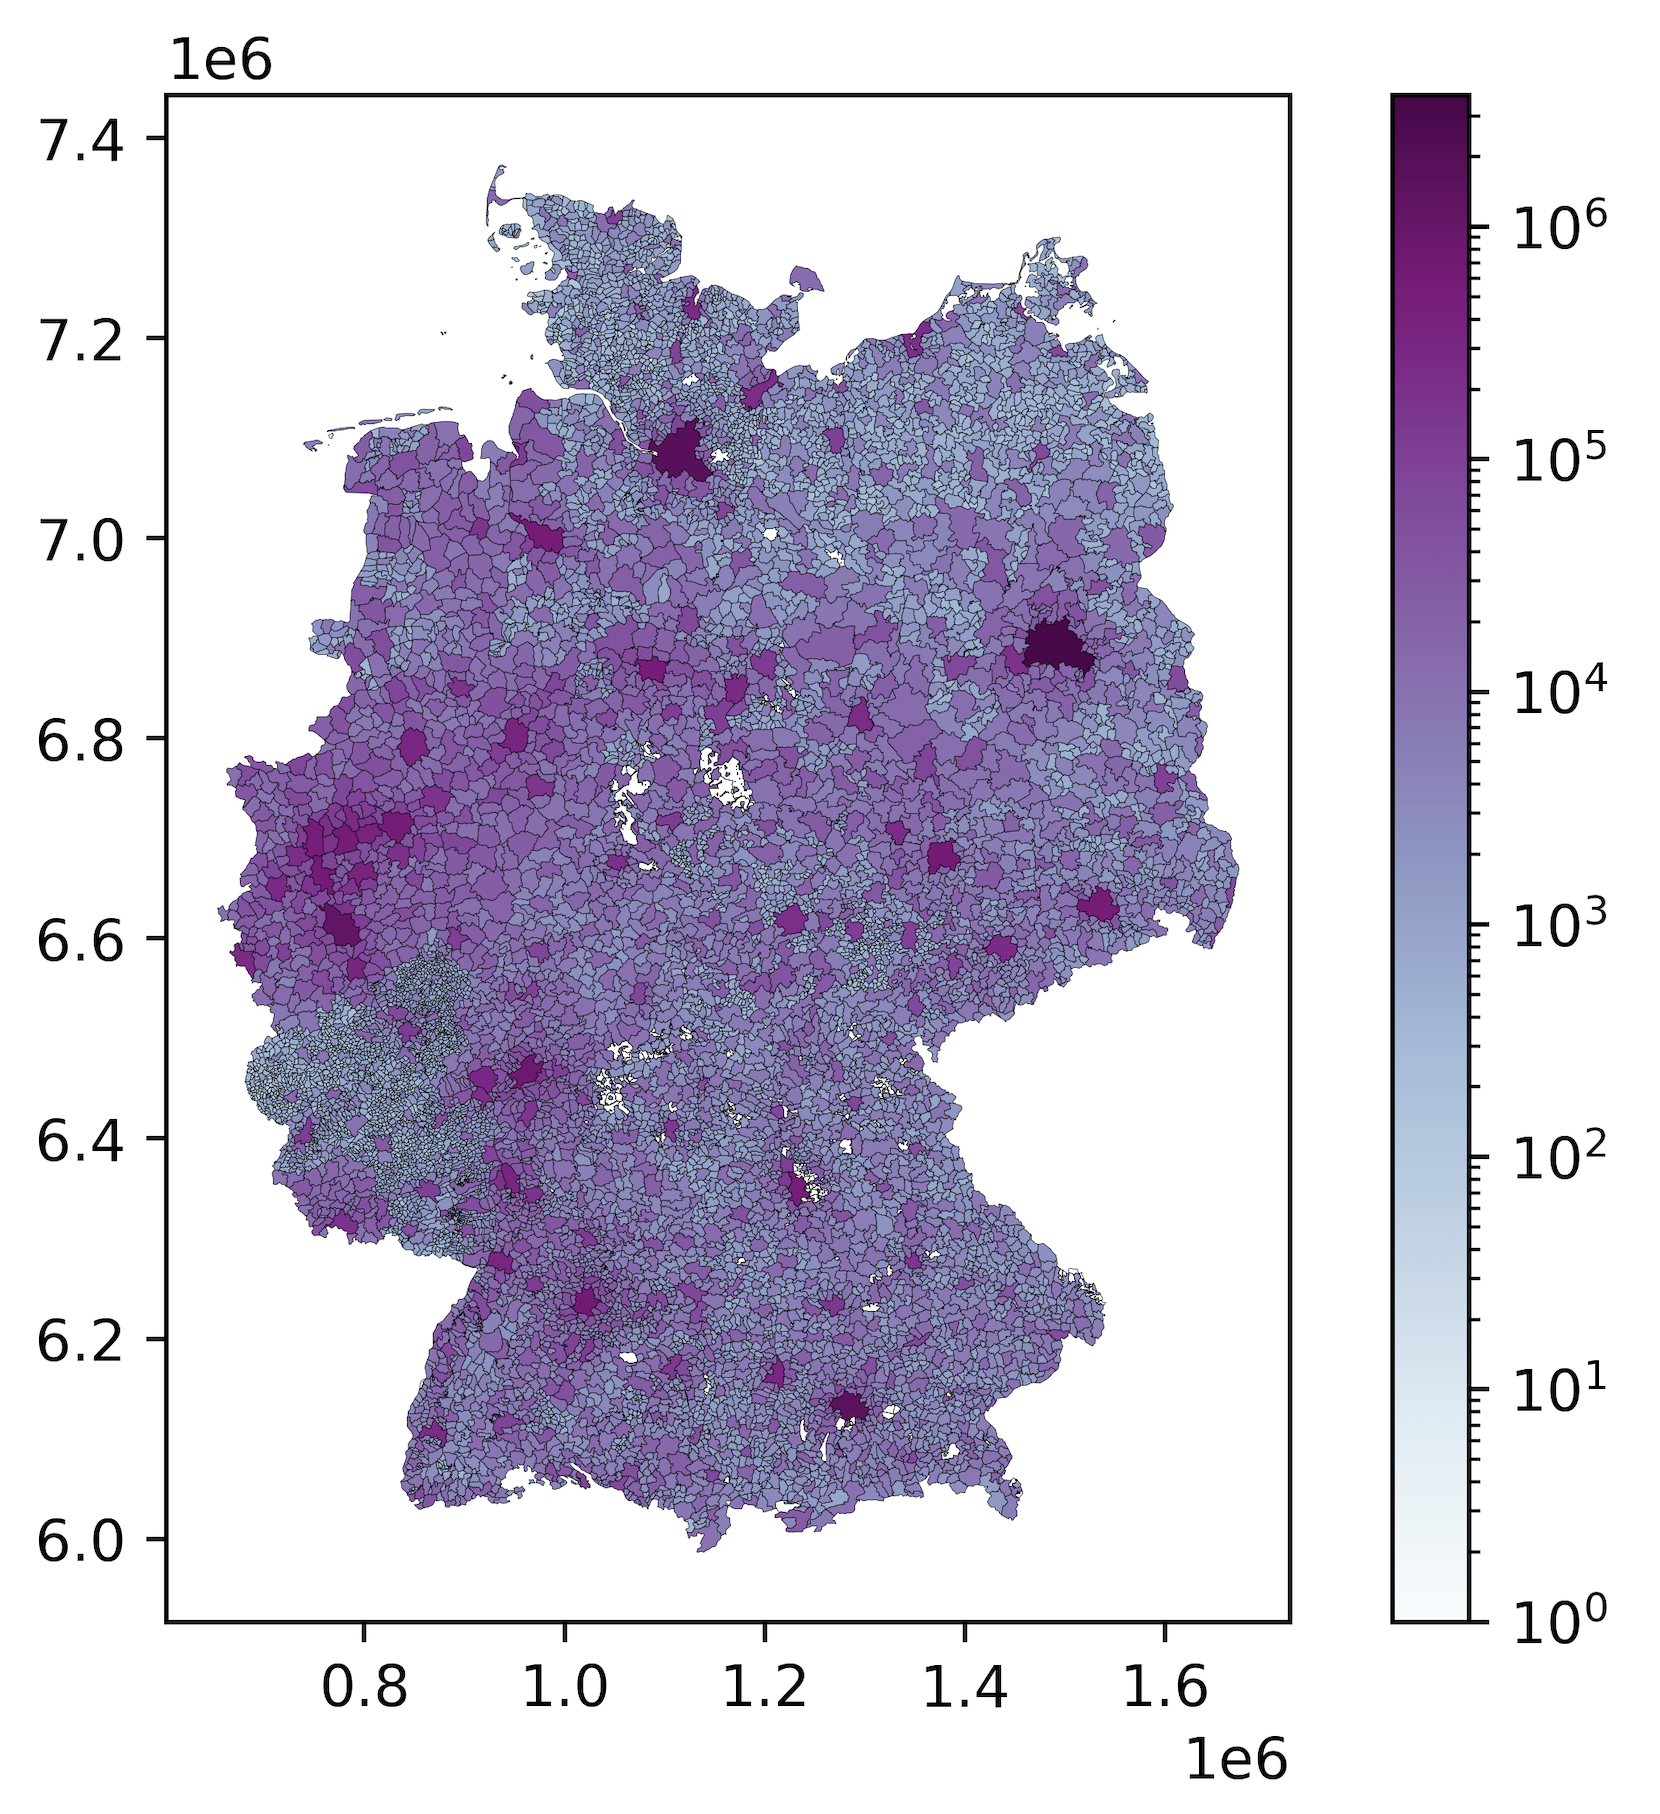 figure 3.4 Population in Germany